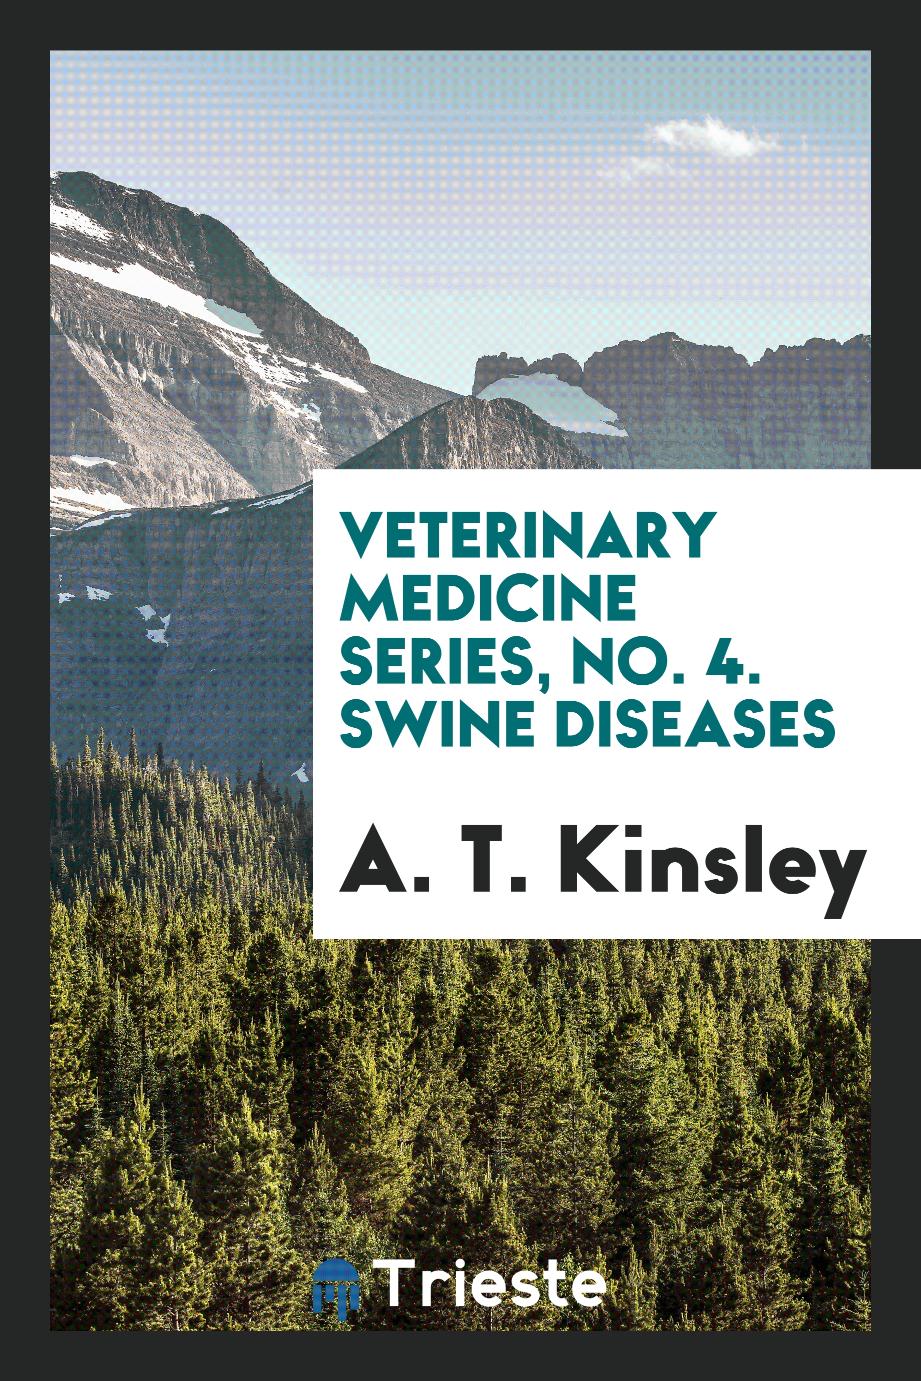 Veterinary medicine series, No. 4. Swine diseases